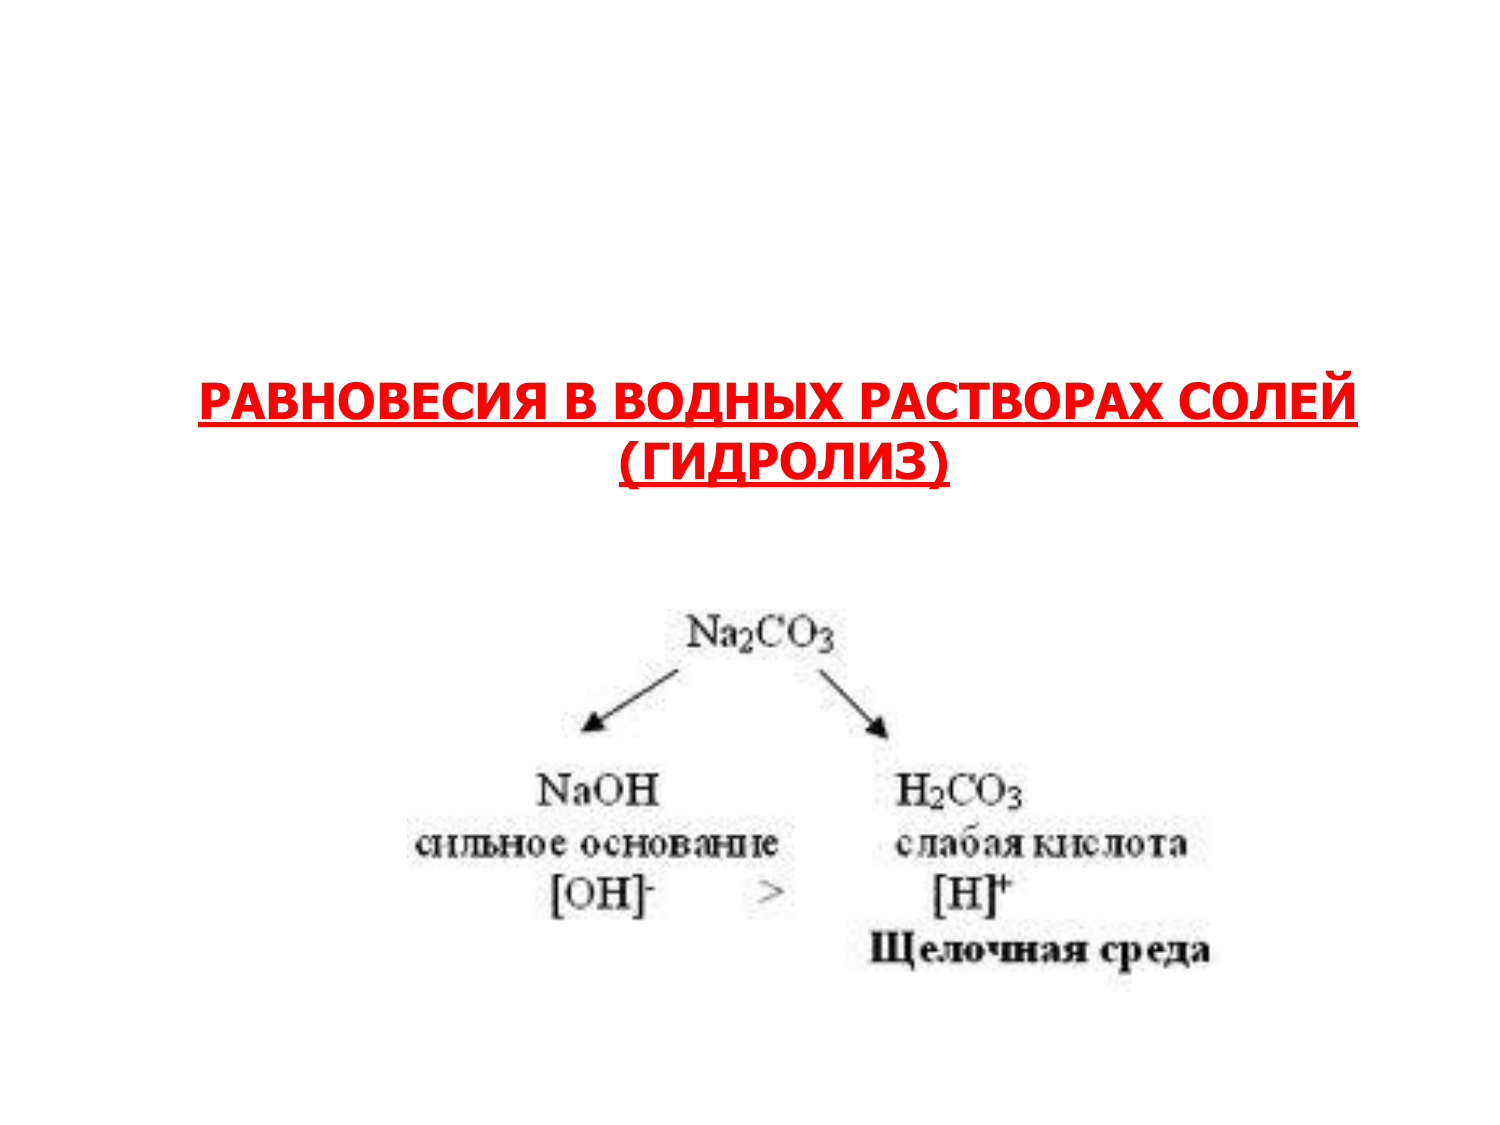 Pb no3 2 na2co3. Гидролиз солей PB no3. Гидролиз солей нитрат свинца 2. Гидролиз нитрата свинца 2. PB(no3)2 реакция гидролиза.